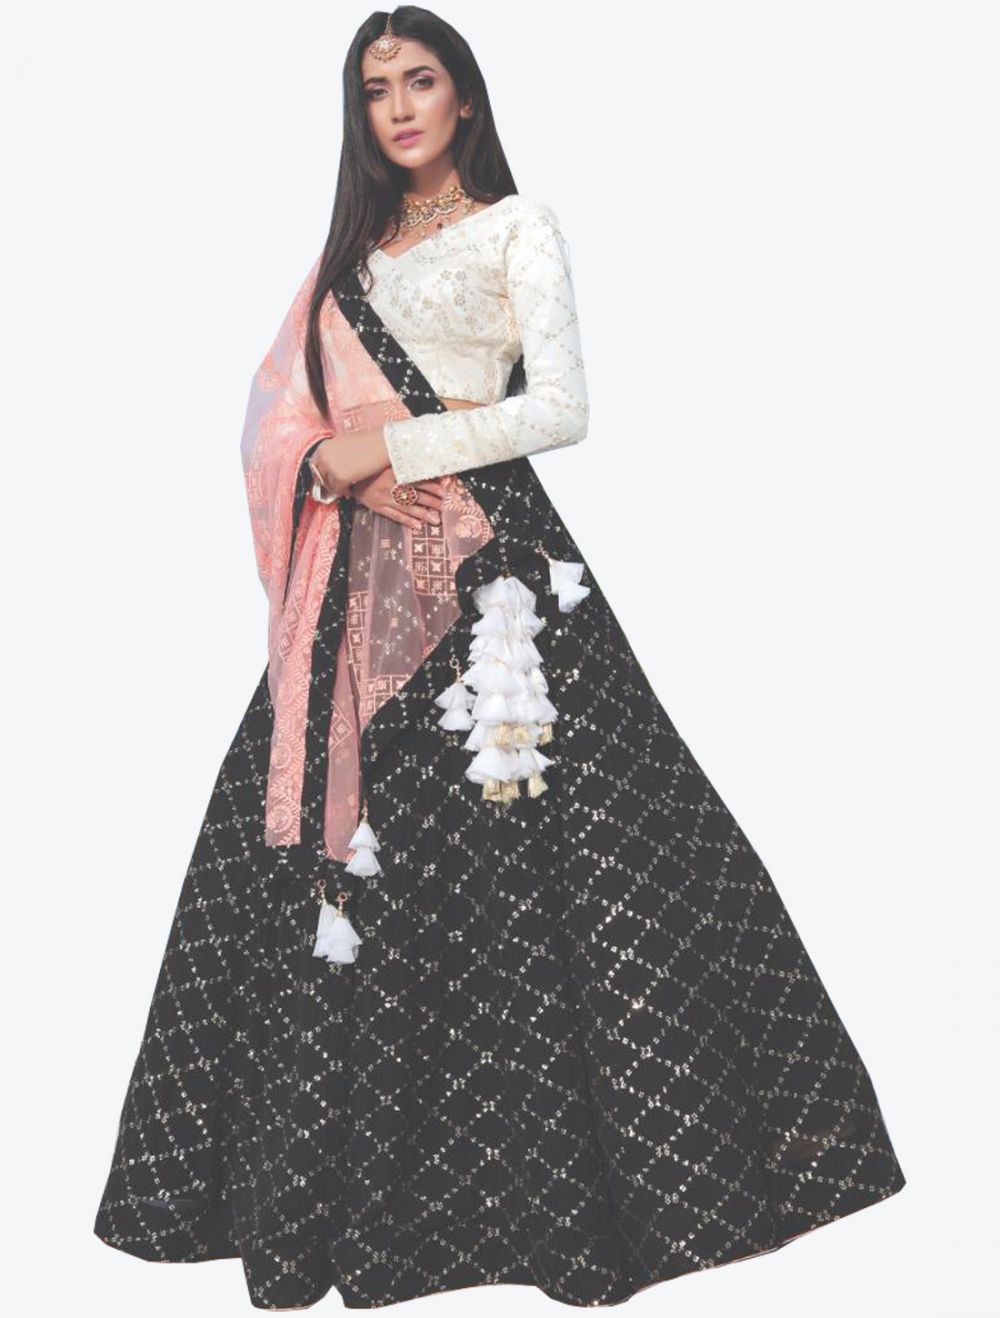 Pinkkart Designer Banarasi Silk Thread Work Bridal Lehenga Choli Dupatta  Wedding Women Dress 4724 at Rs 3950 | ब्राइडल सिल्क लहंगा in New Delhi |  ID: 22889835097